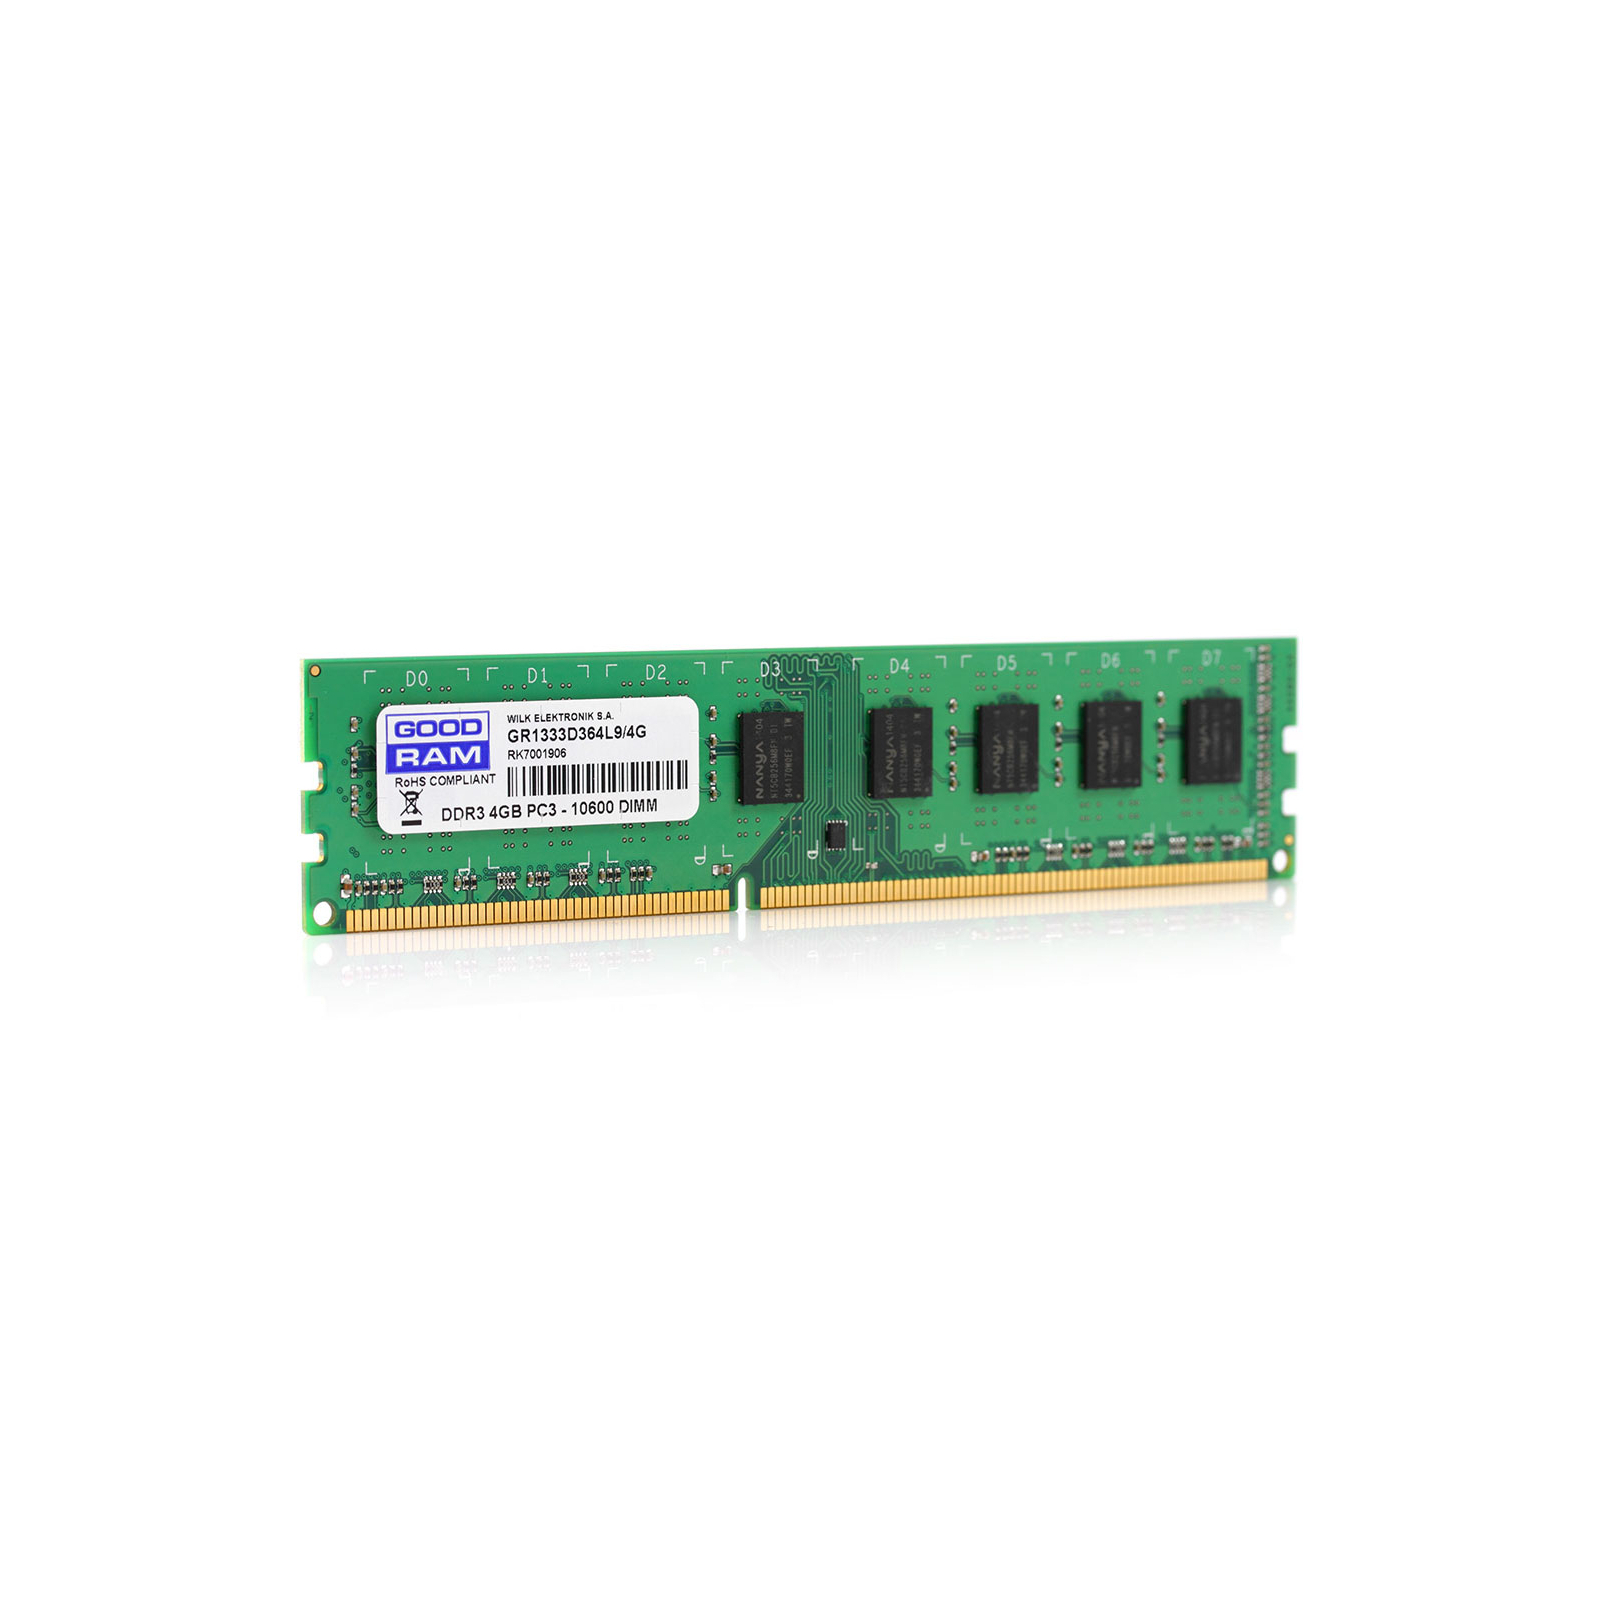 Модуль памяти для компьютера DDR3 4GB 1333 MHz Goodram (GR1333D364L9/4G)